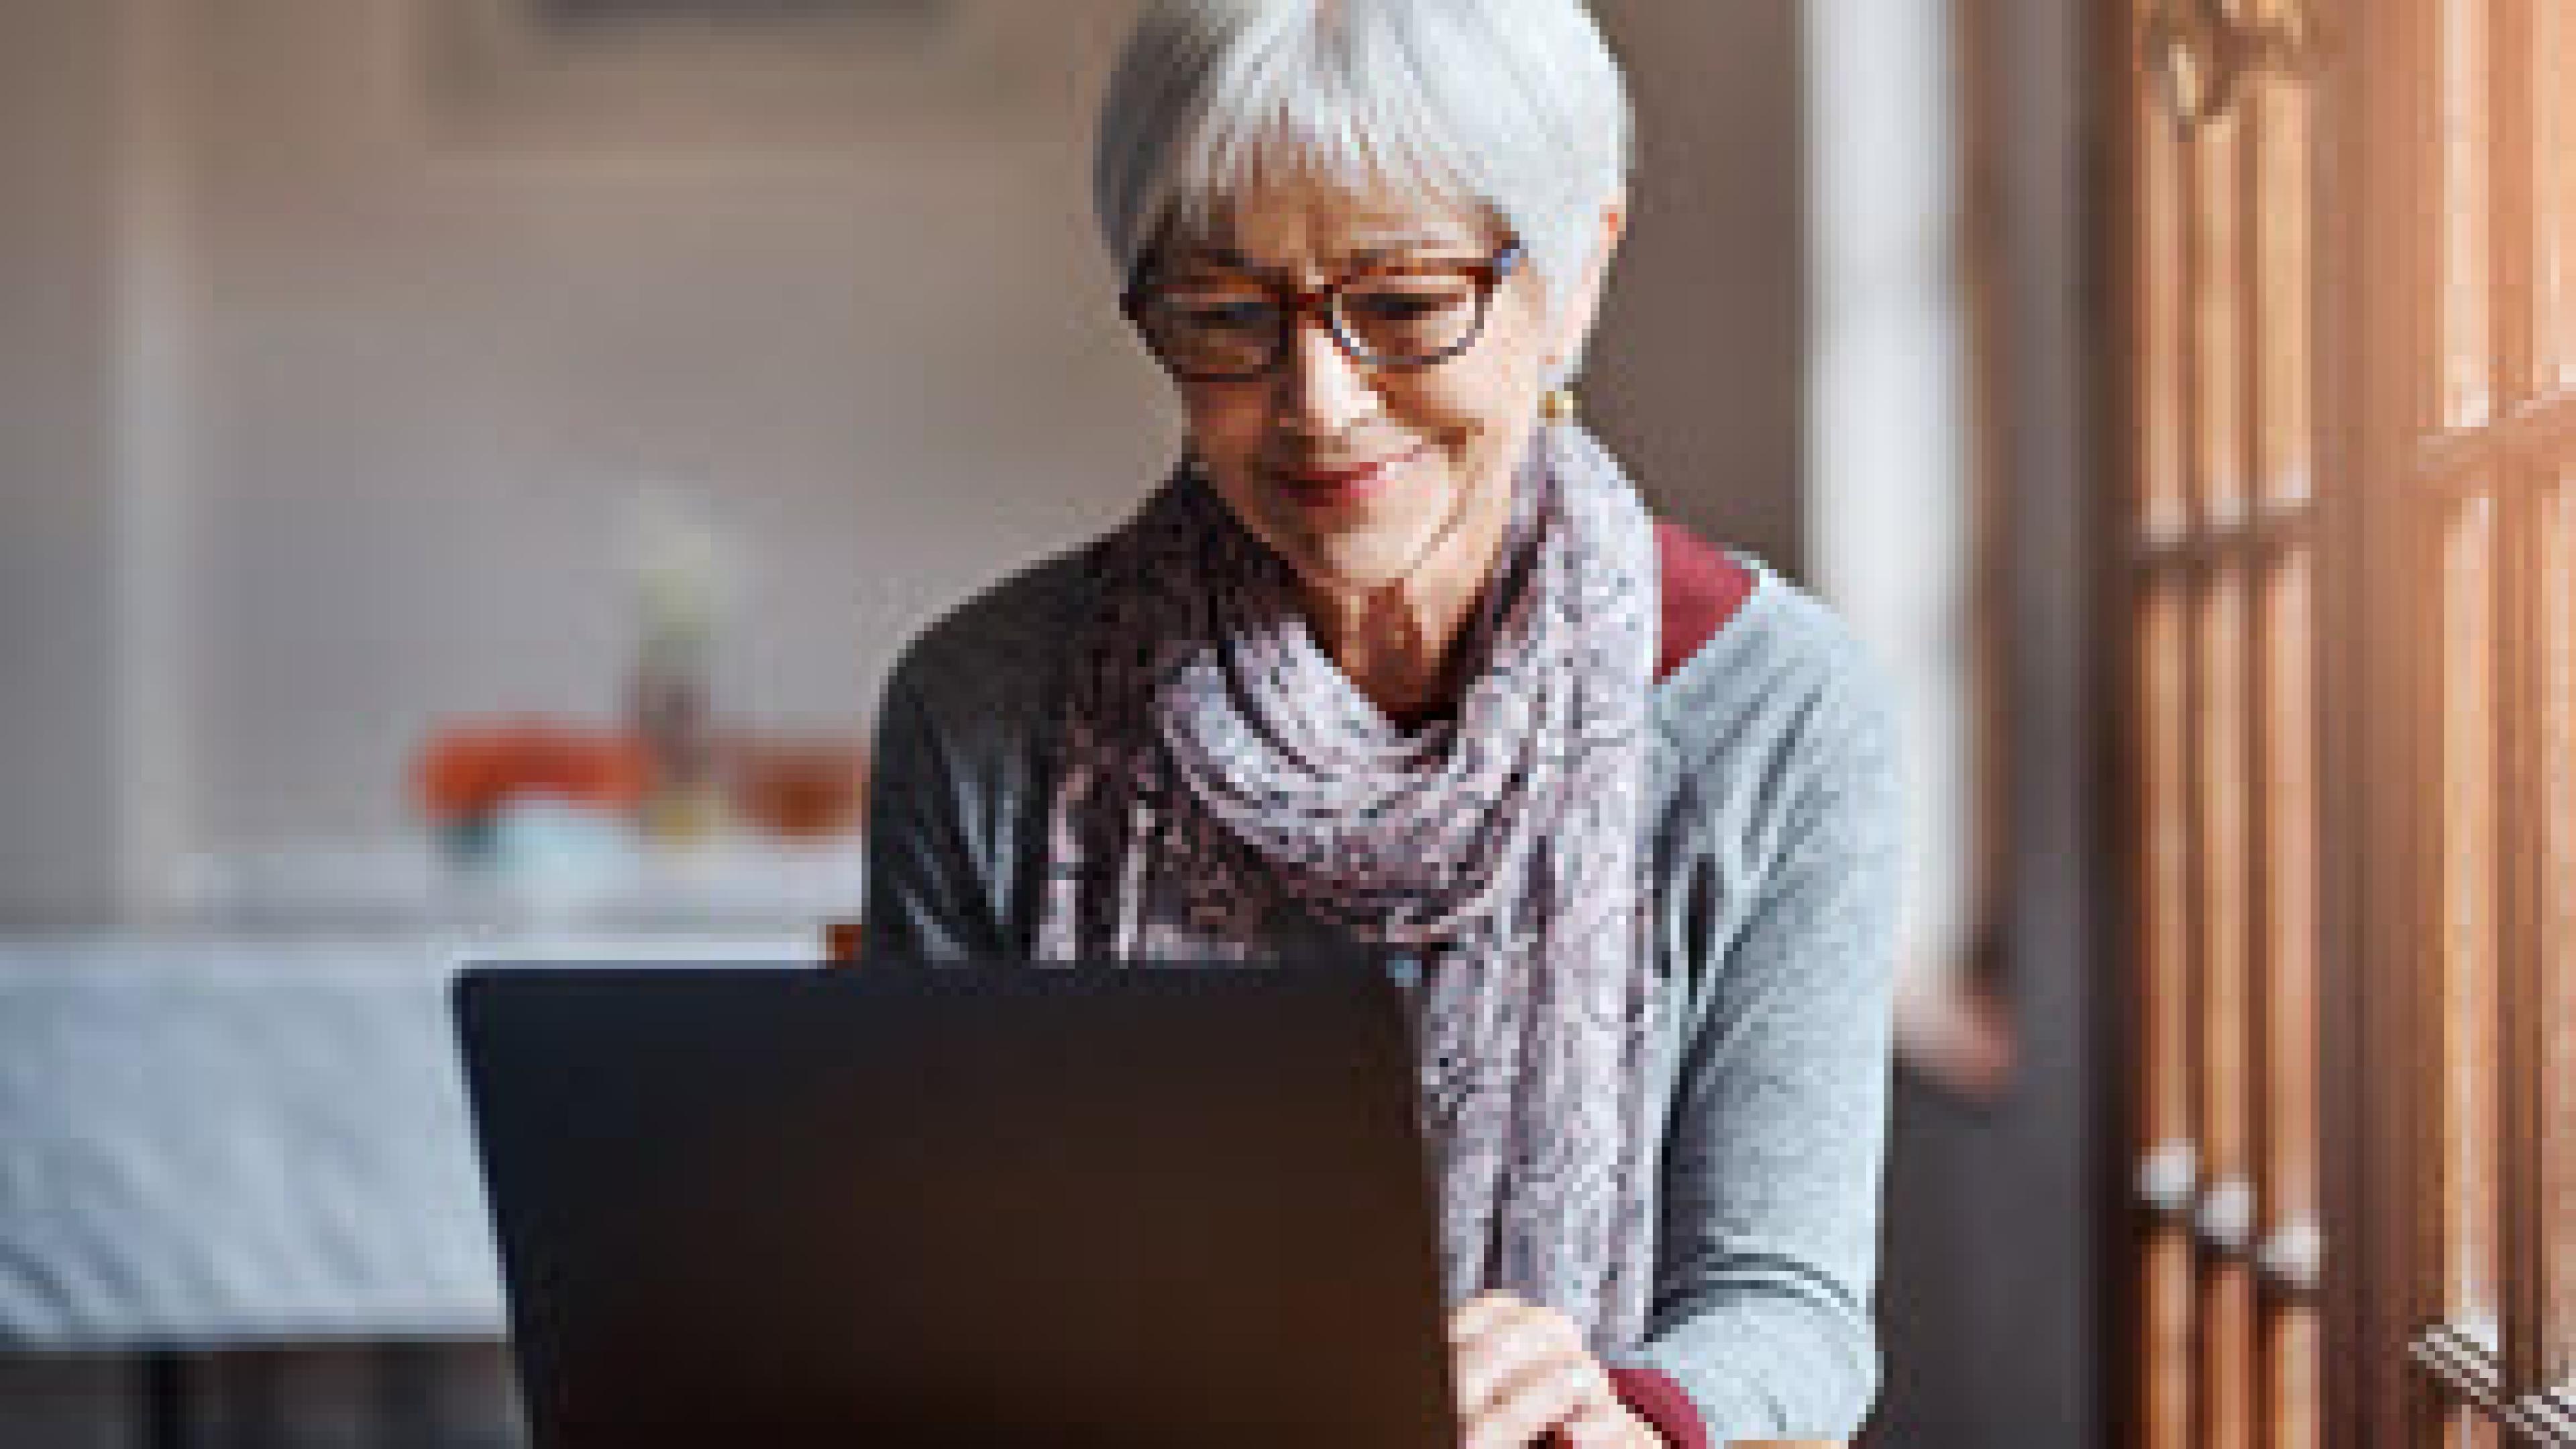 Senior woman looking at laptop